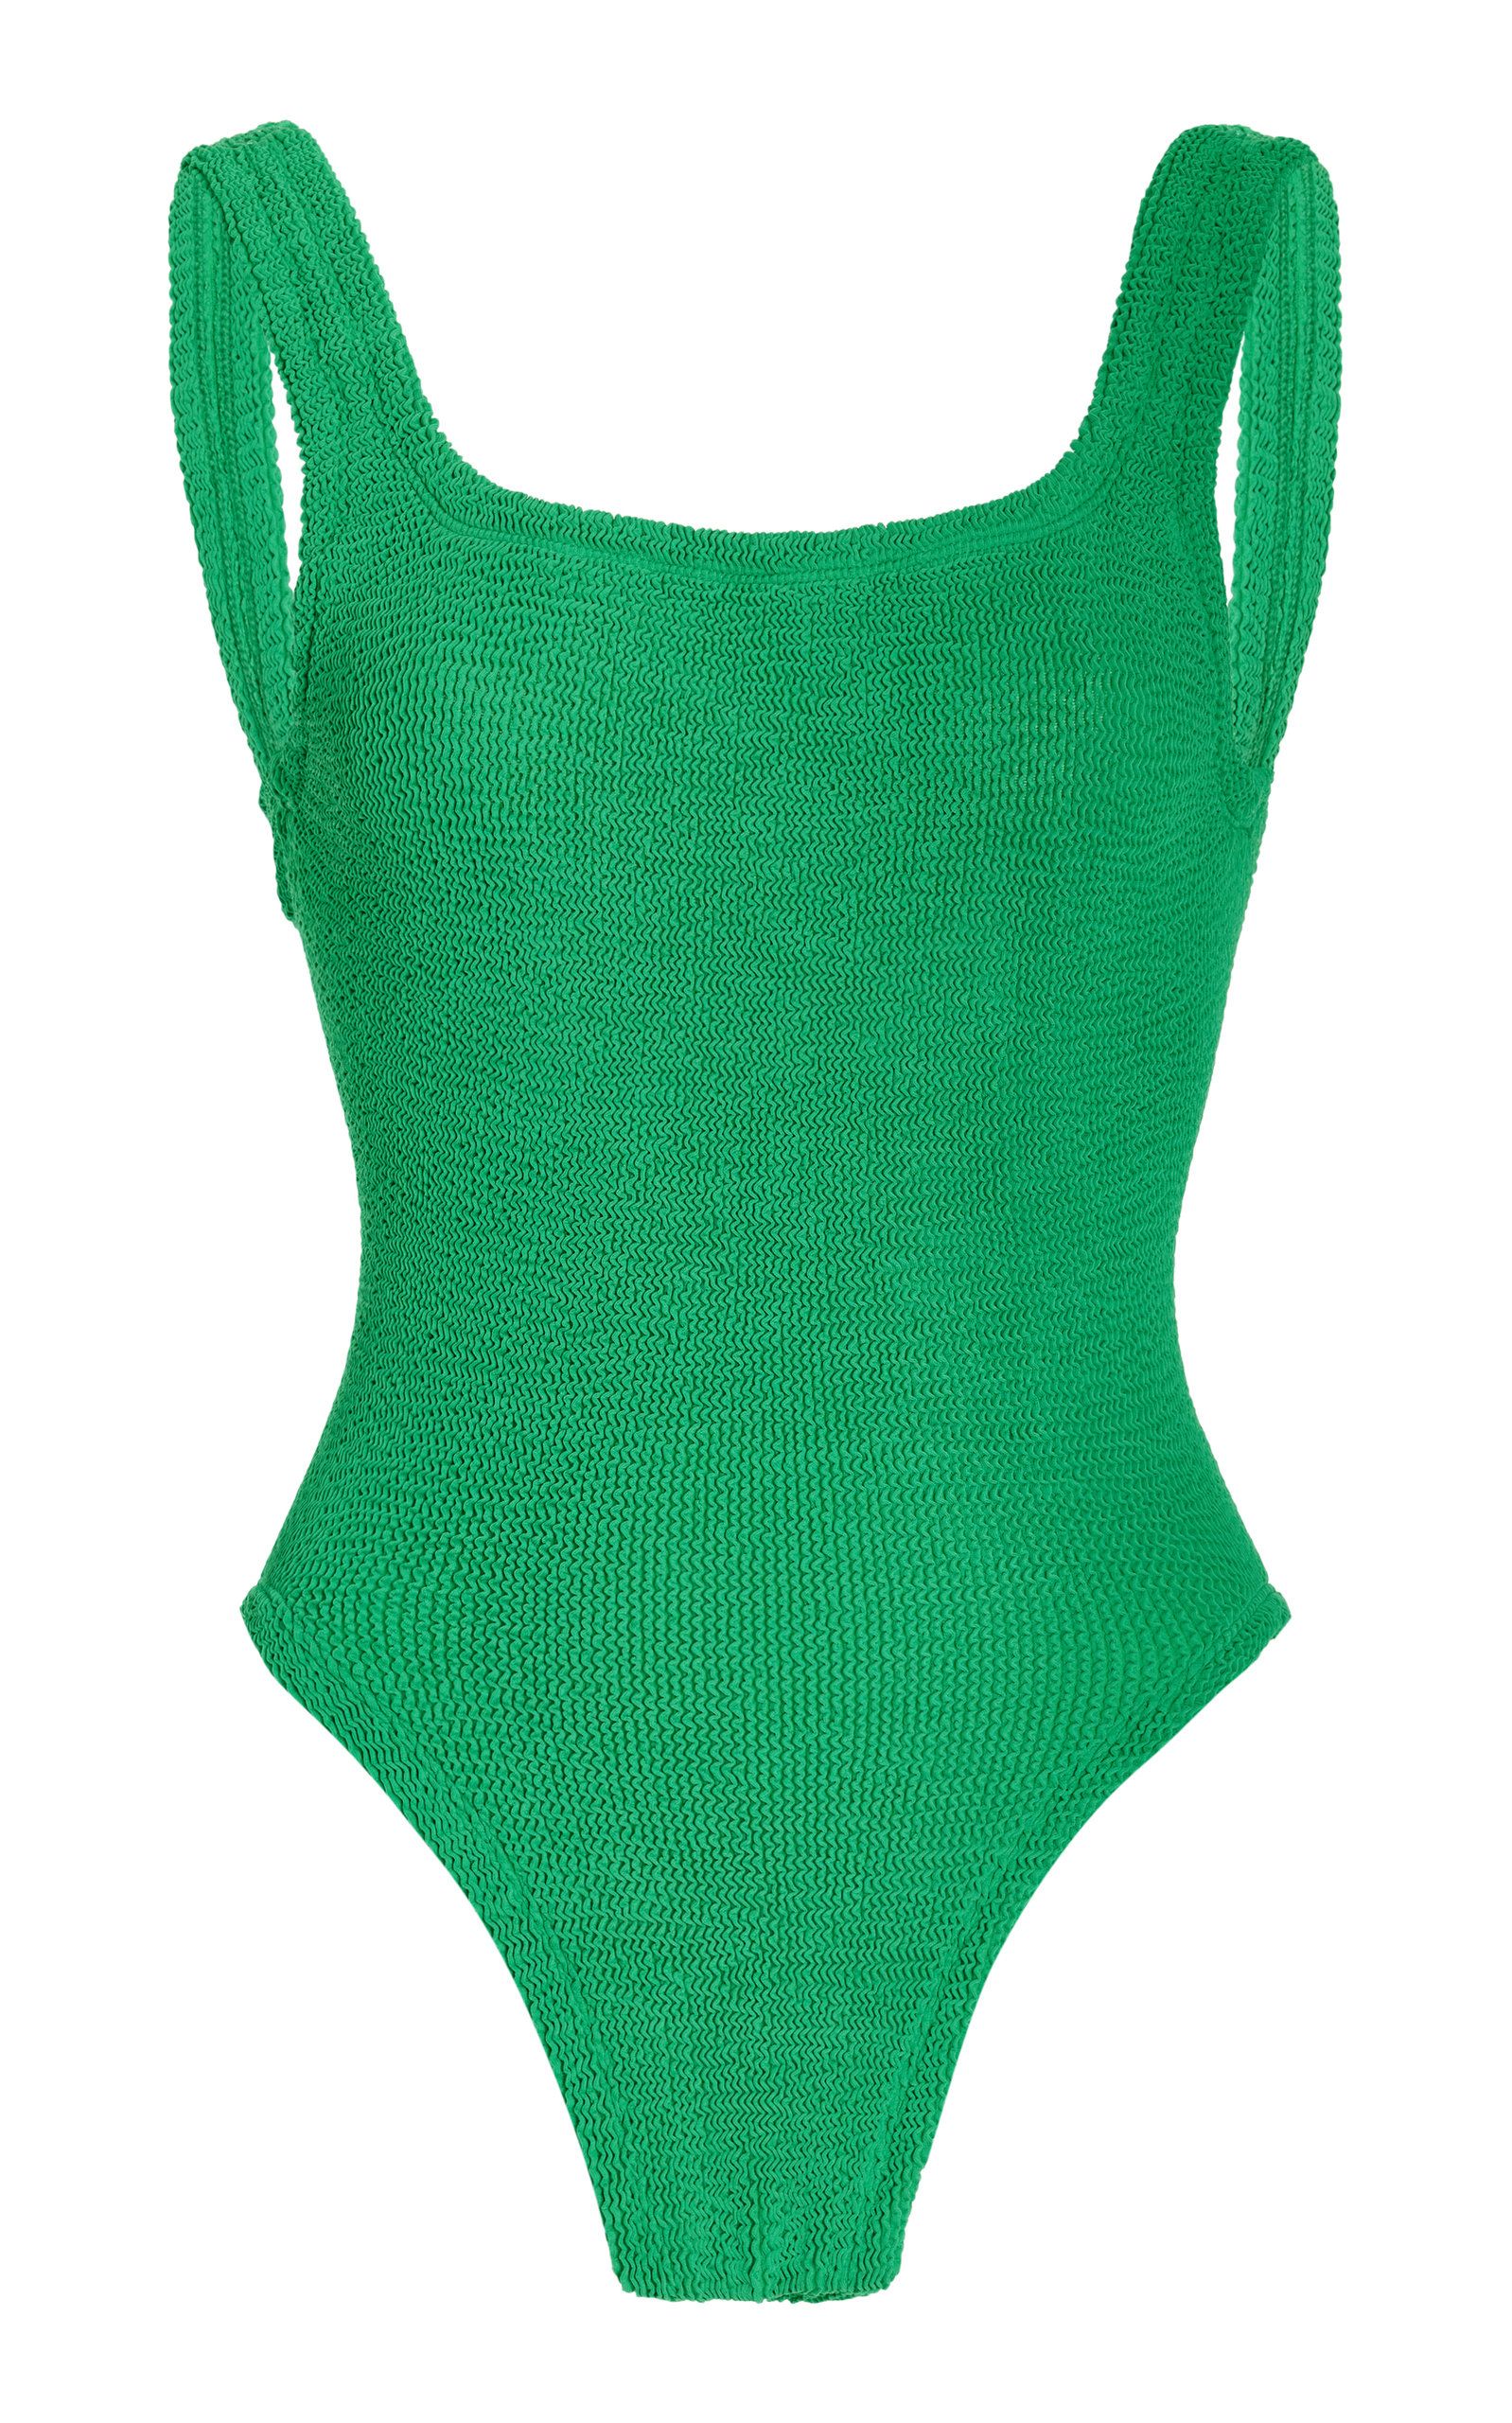 Hunza G - Women's Square-Neck Seersucker One-Piece Swimsuit - Green - Moda Operandi | Moda Operandi (Global)